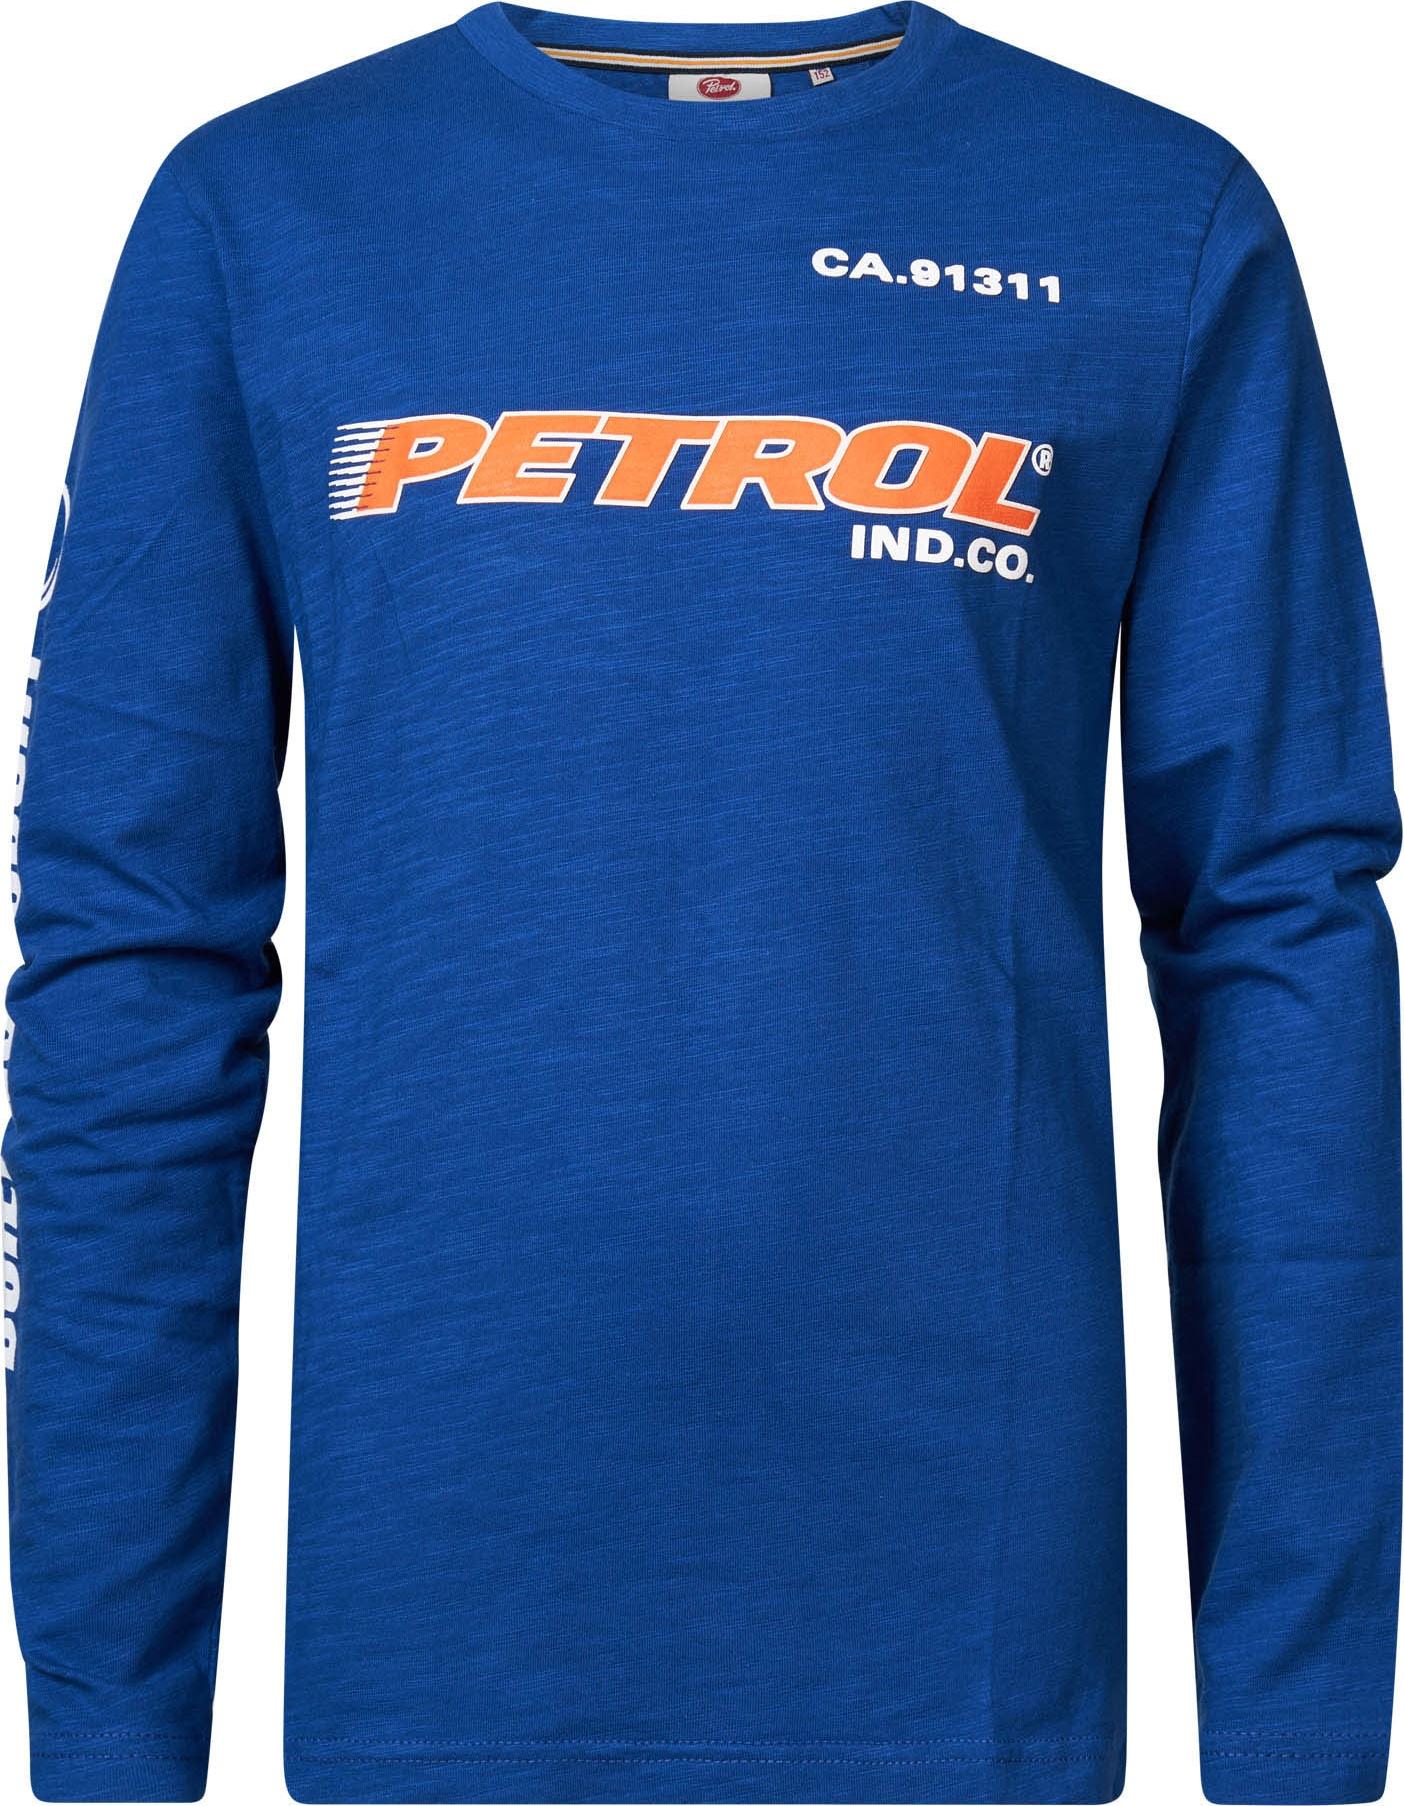 Tričko Petrol Industries královská modrá / oranžová / bílá